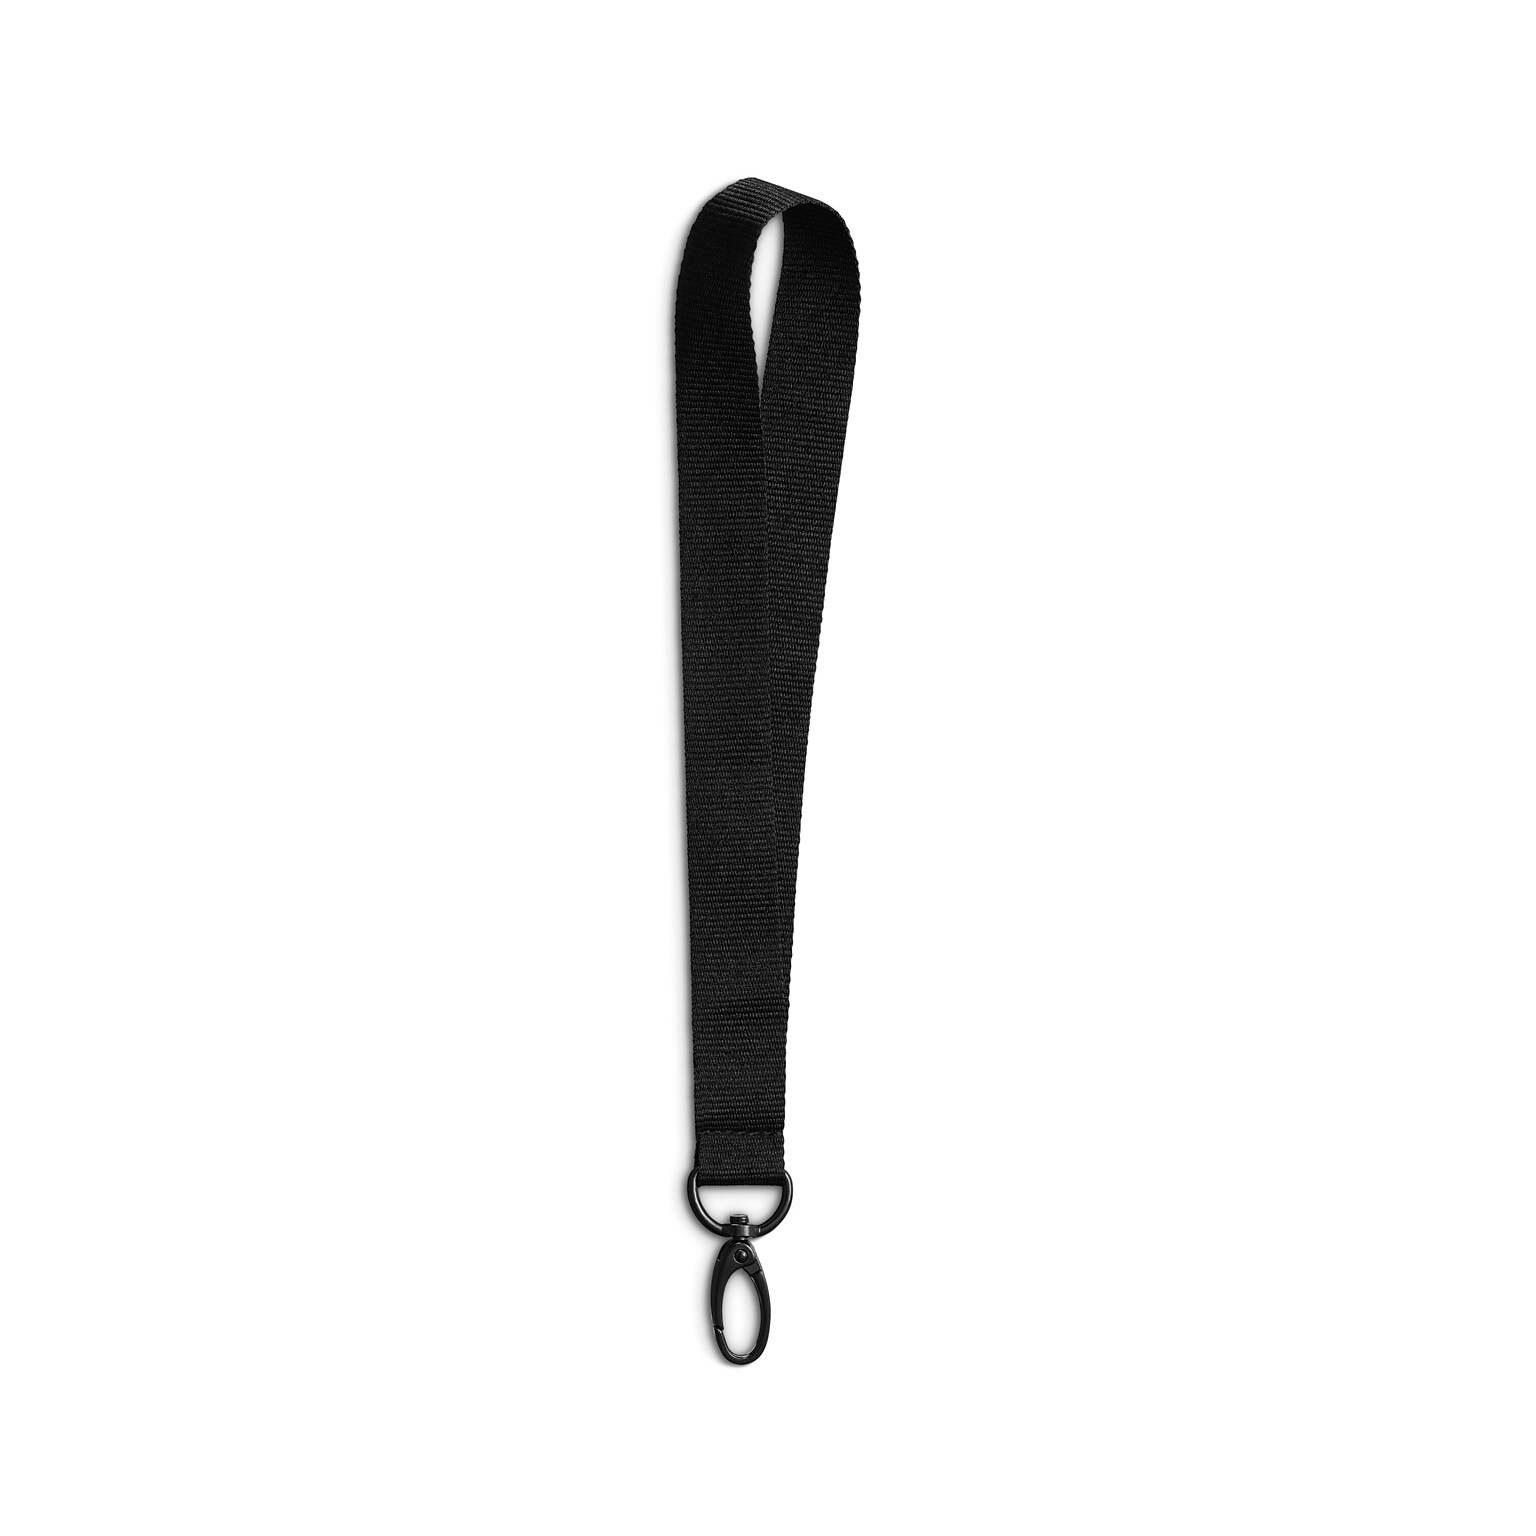 Staples Wrist Lanyard, 9 Length, Nylon, Black (51920)